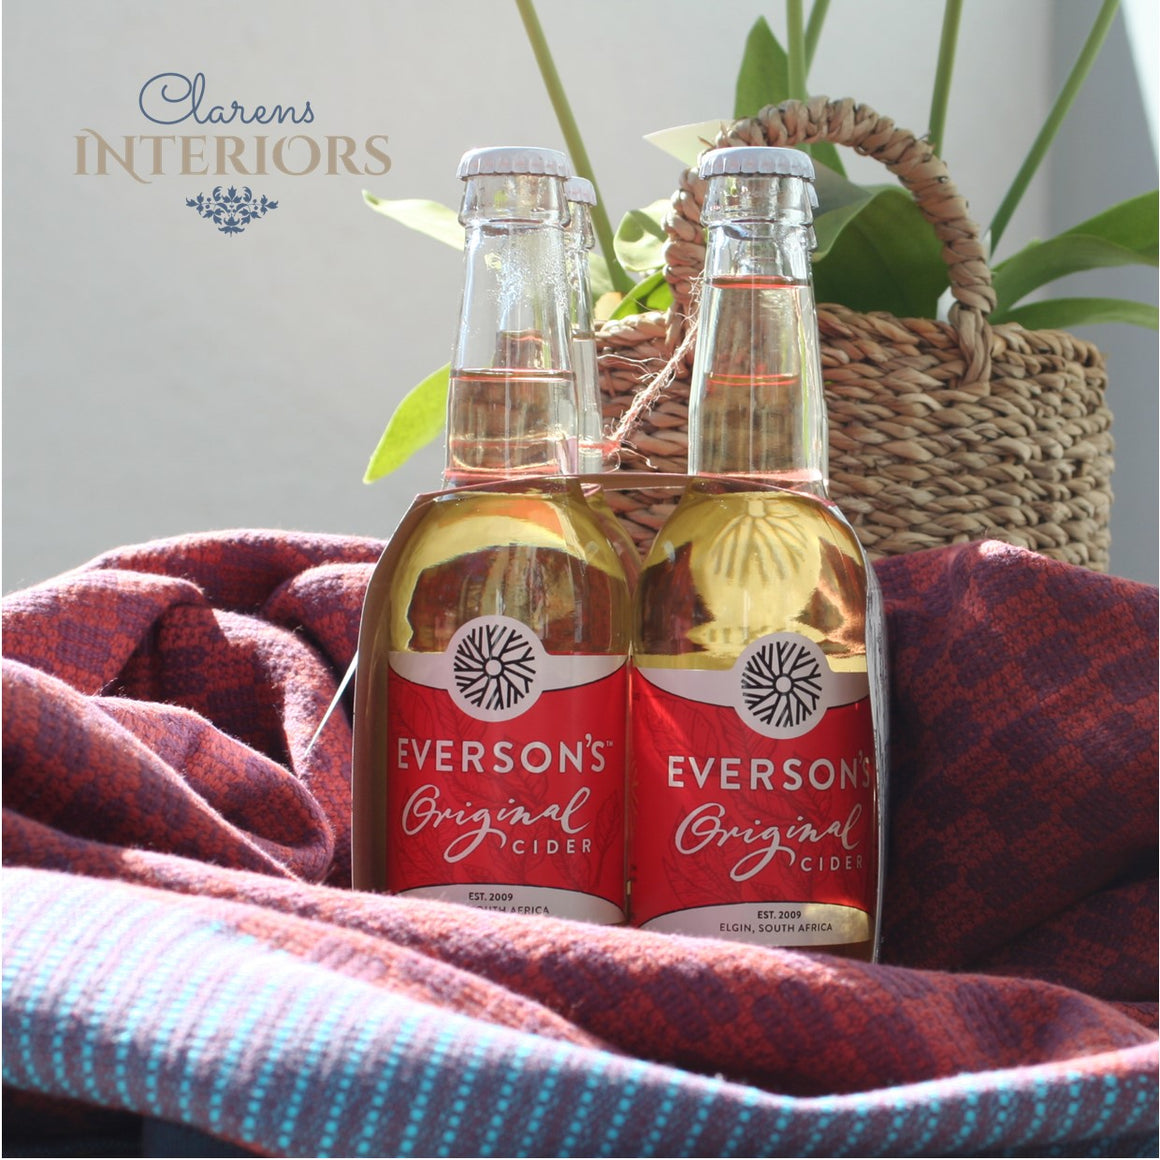 Everson's Cider